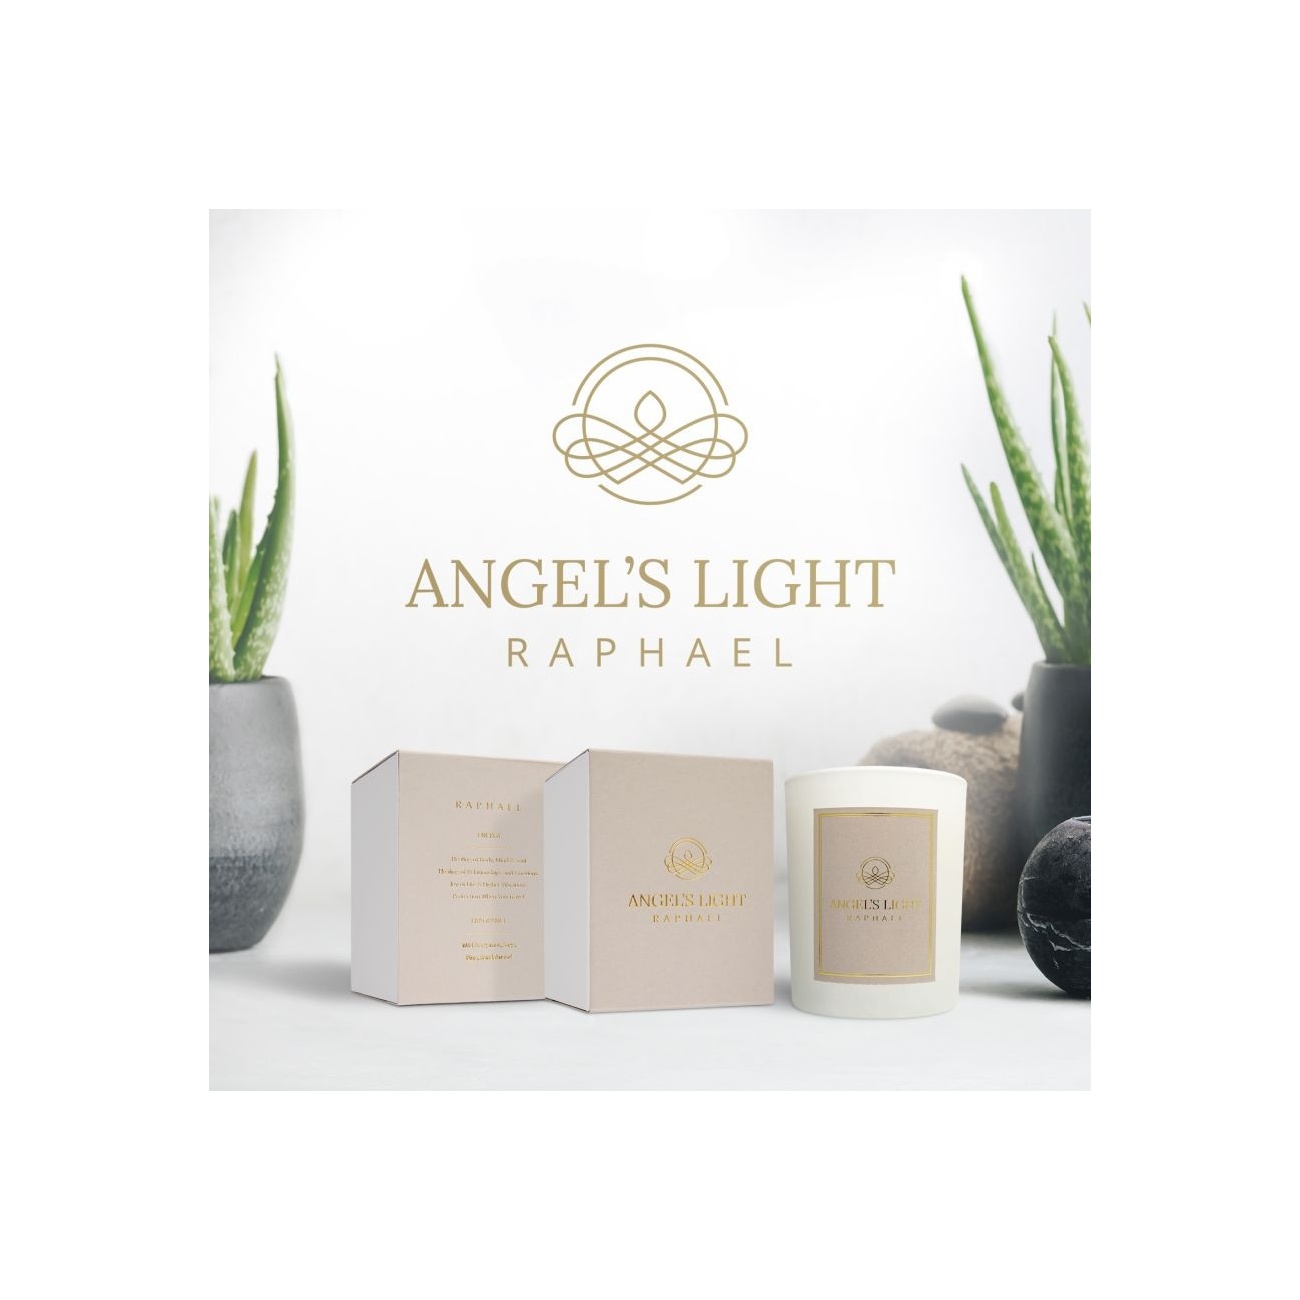 angels_light-raphael-cotton_4_lifestyle_2